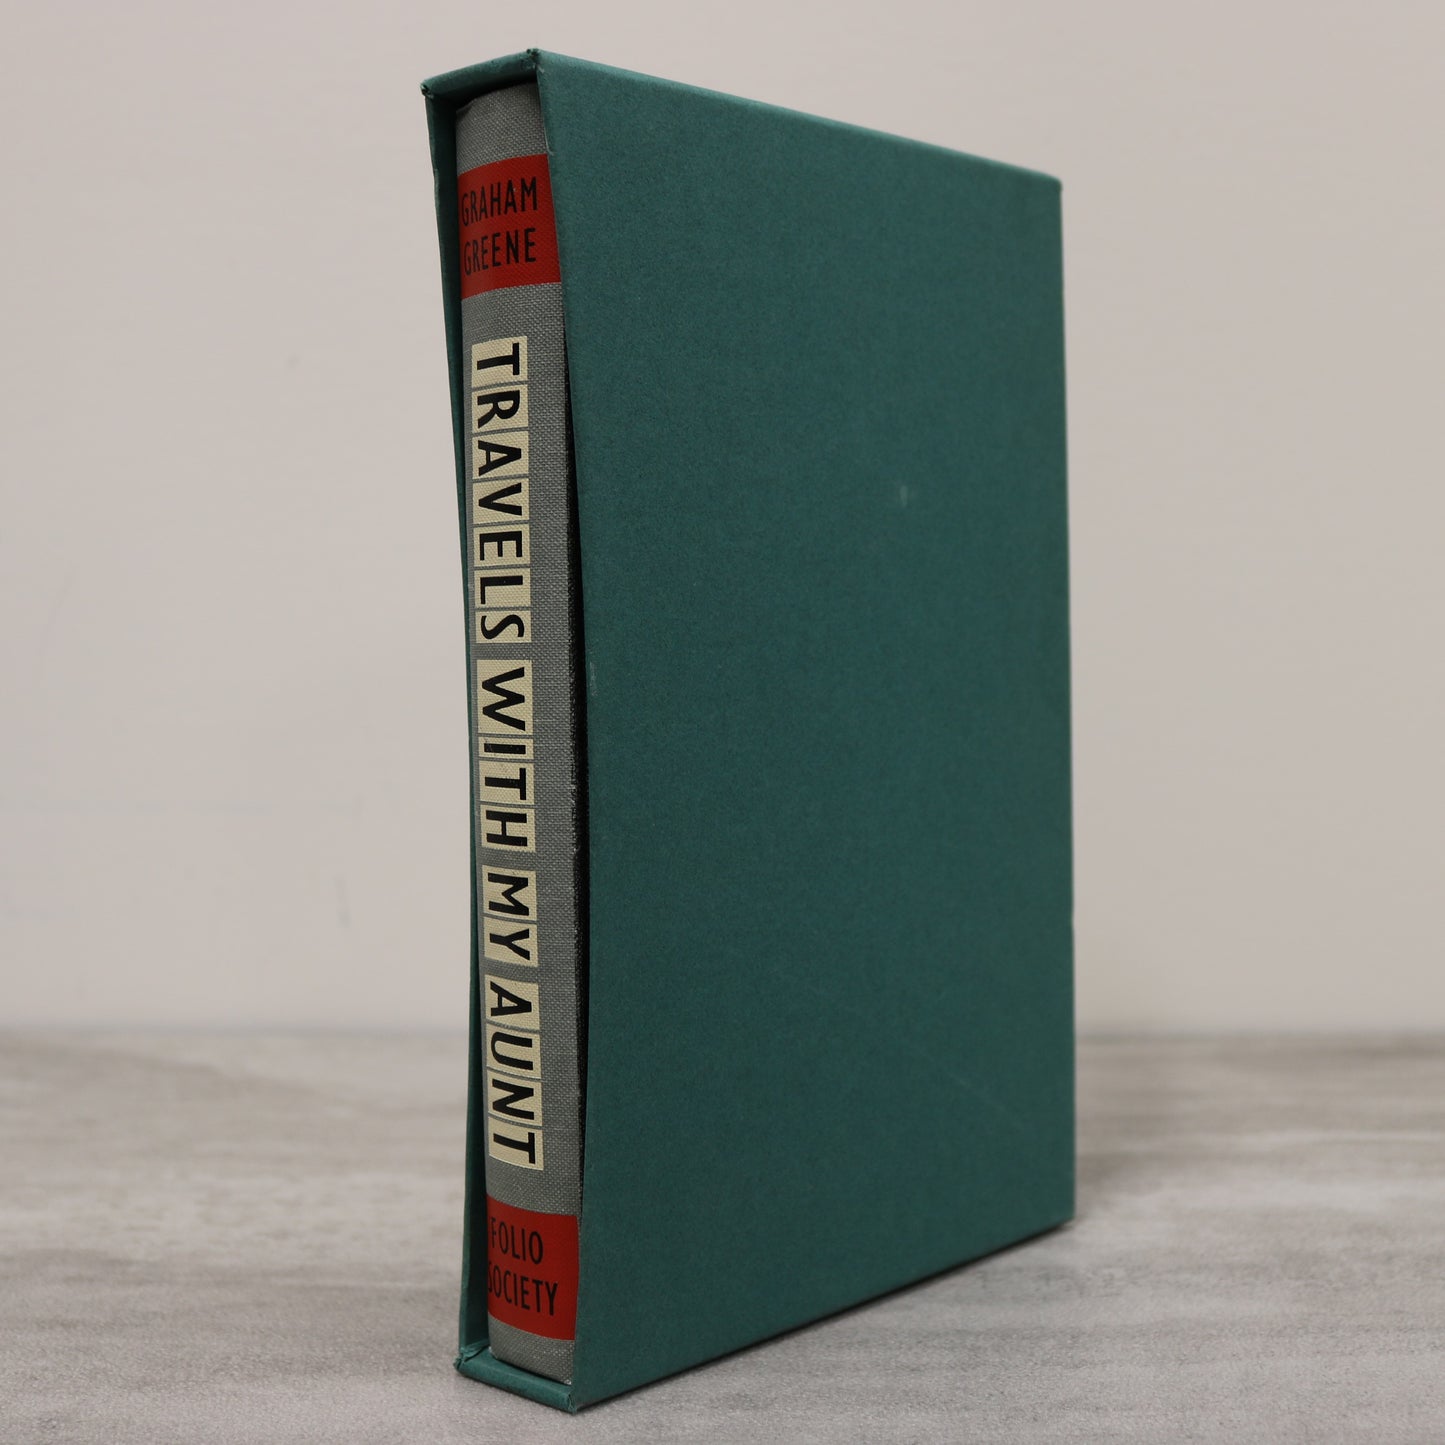 Graham Greene Travels With Aunt Folio Society Fiction Novel Hardcover Used Book